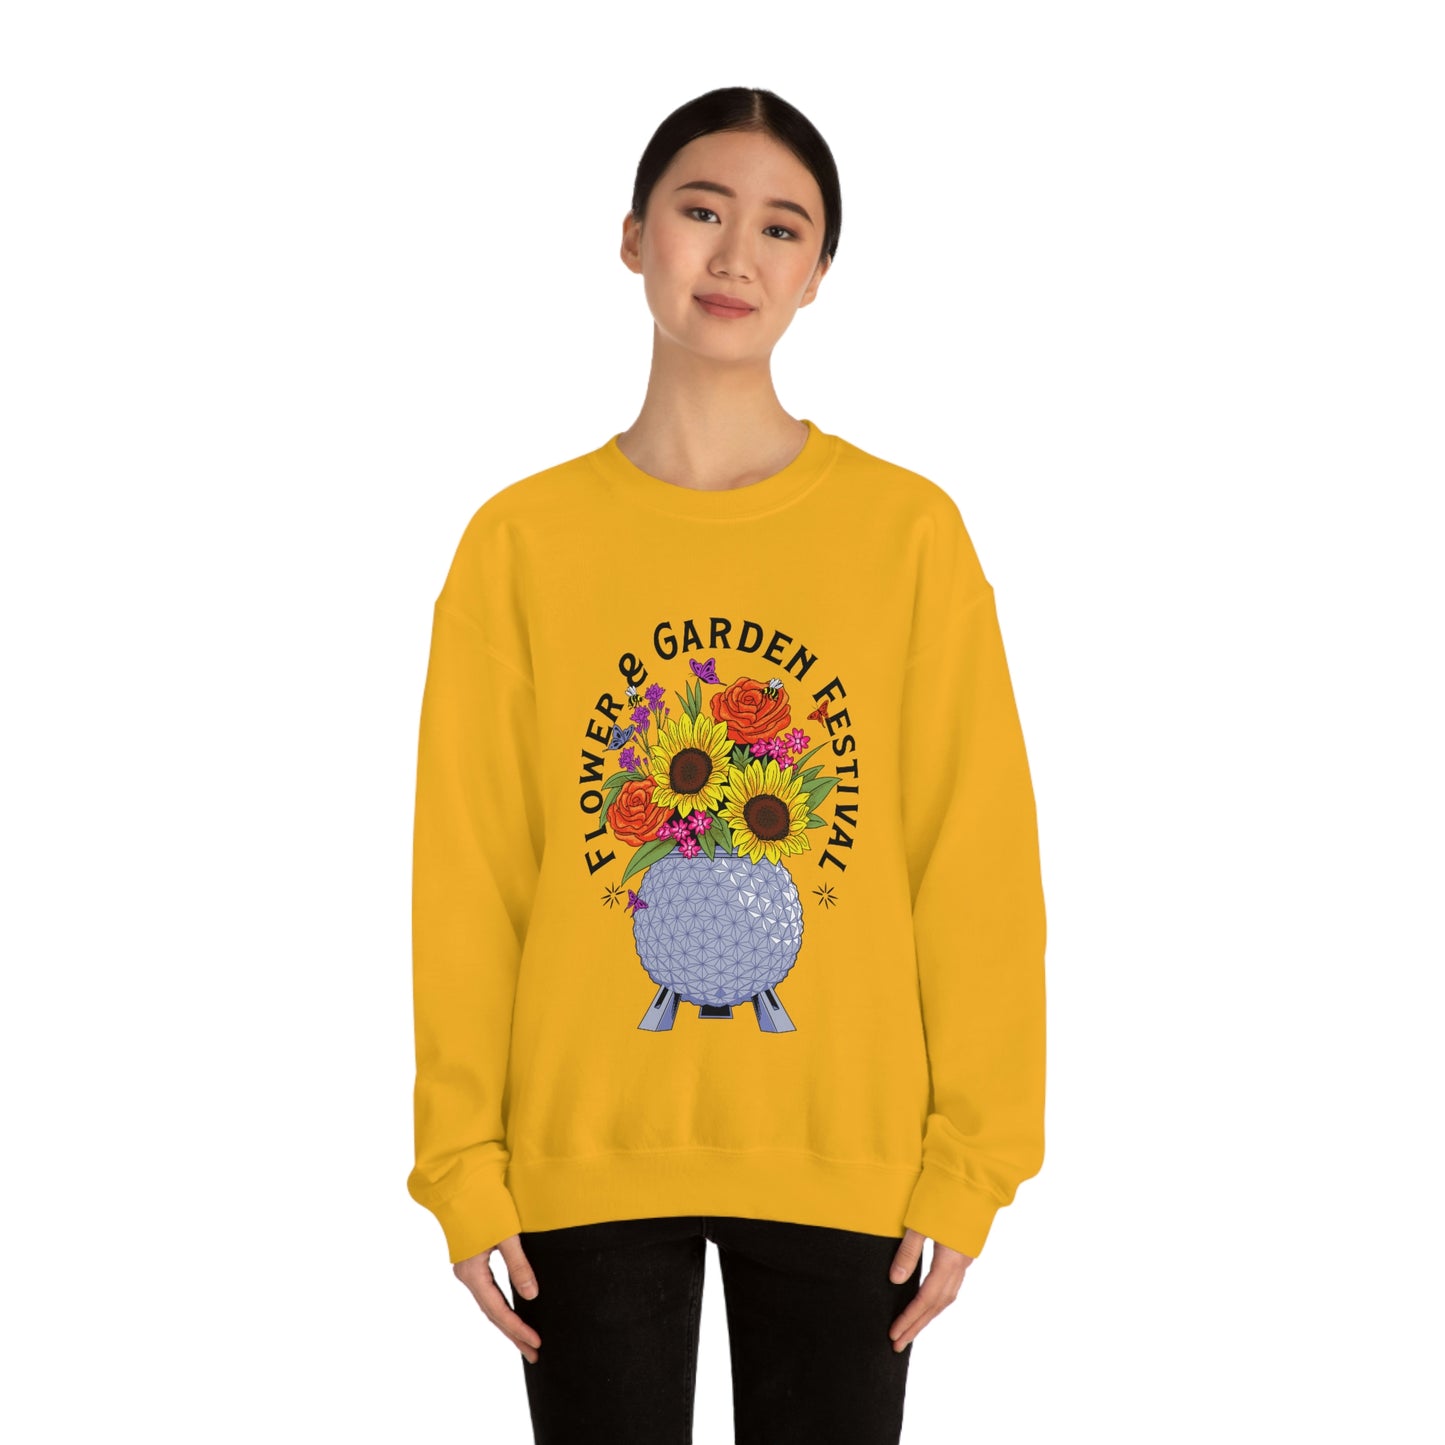 Flower & Garden Festival - Adult Crewneck Sweatshirt